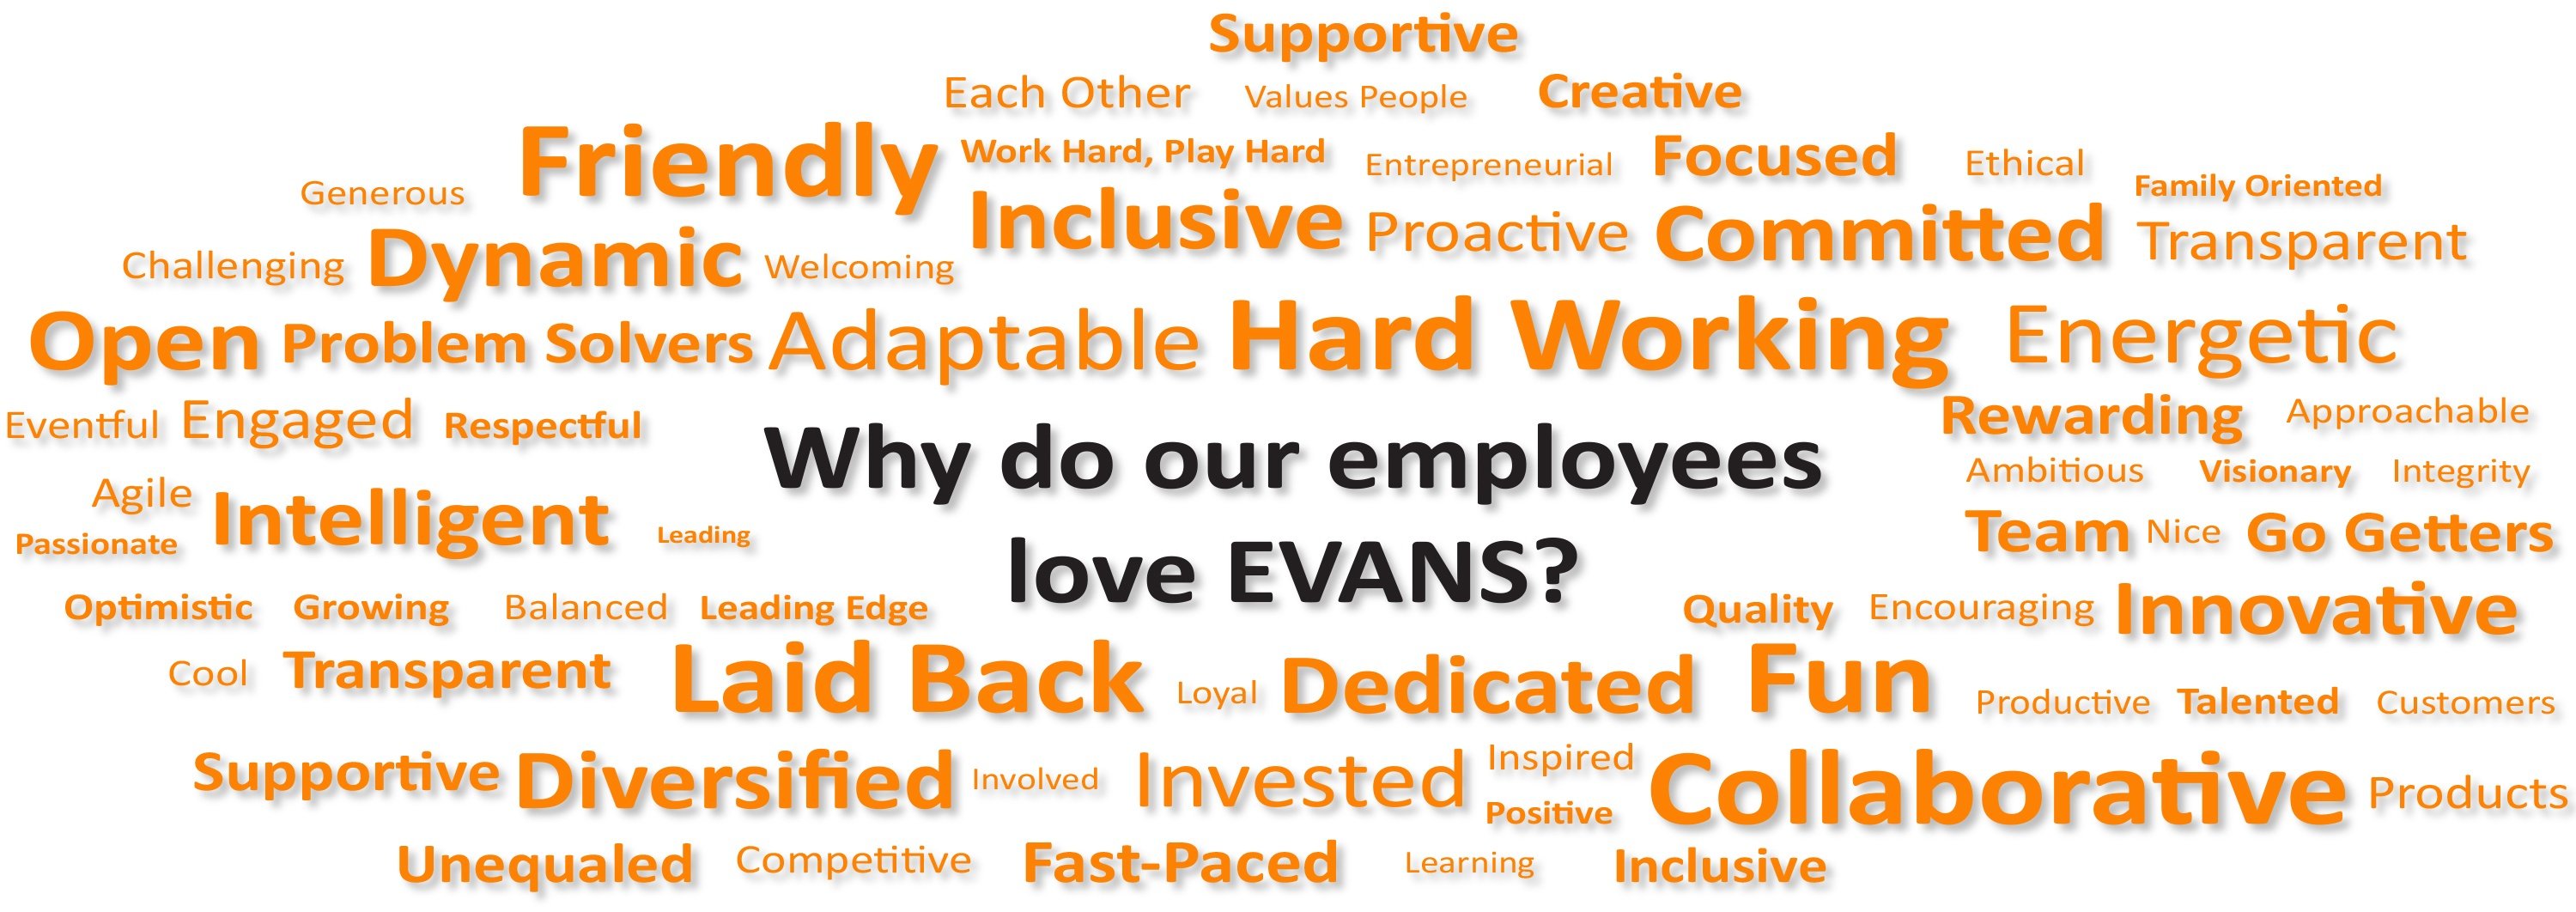 employees-love-evans-3000x1062.jpg